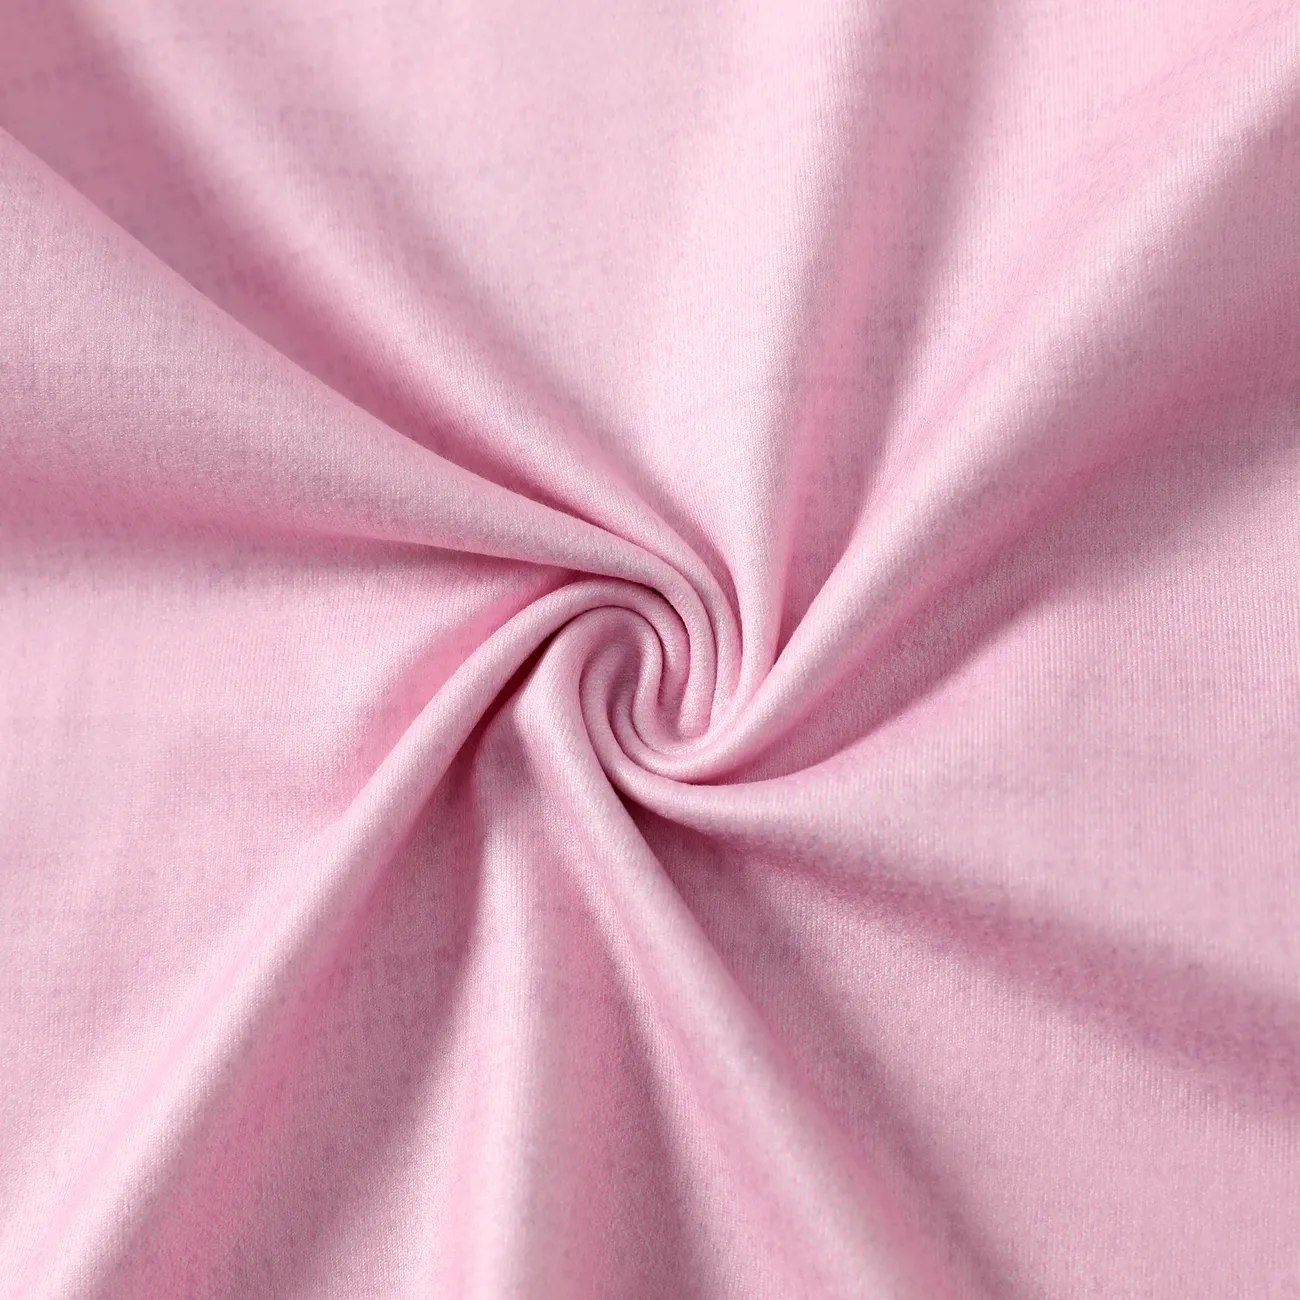 Peppa Pig Kleinkinder Mädchen Flatterärmel Kindlich Kurzärmelig T-Shirts rosa big image 1